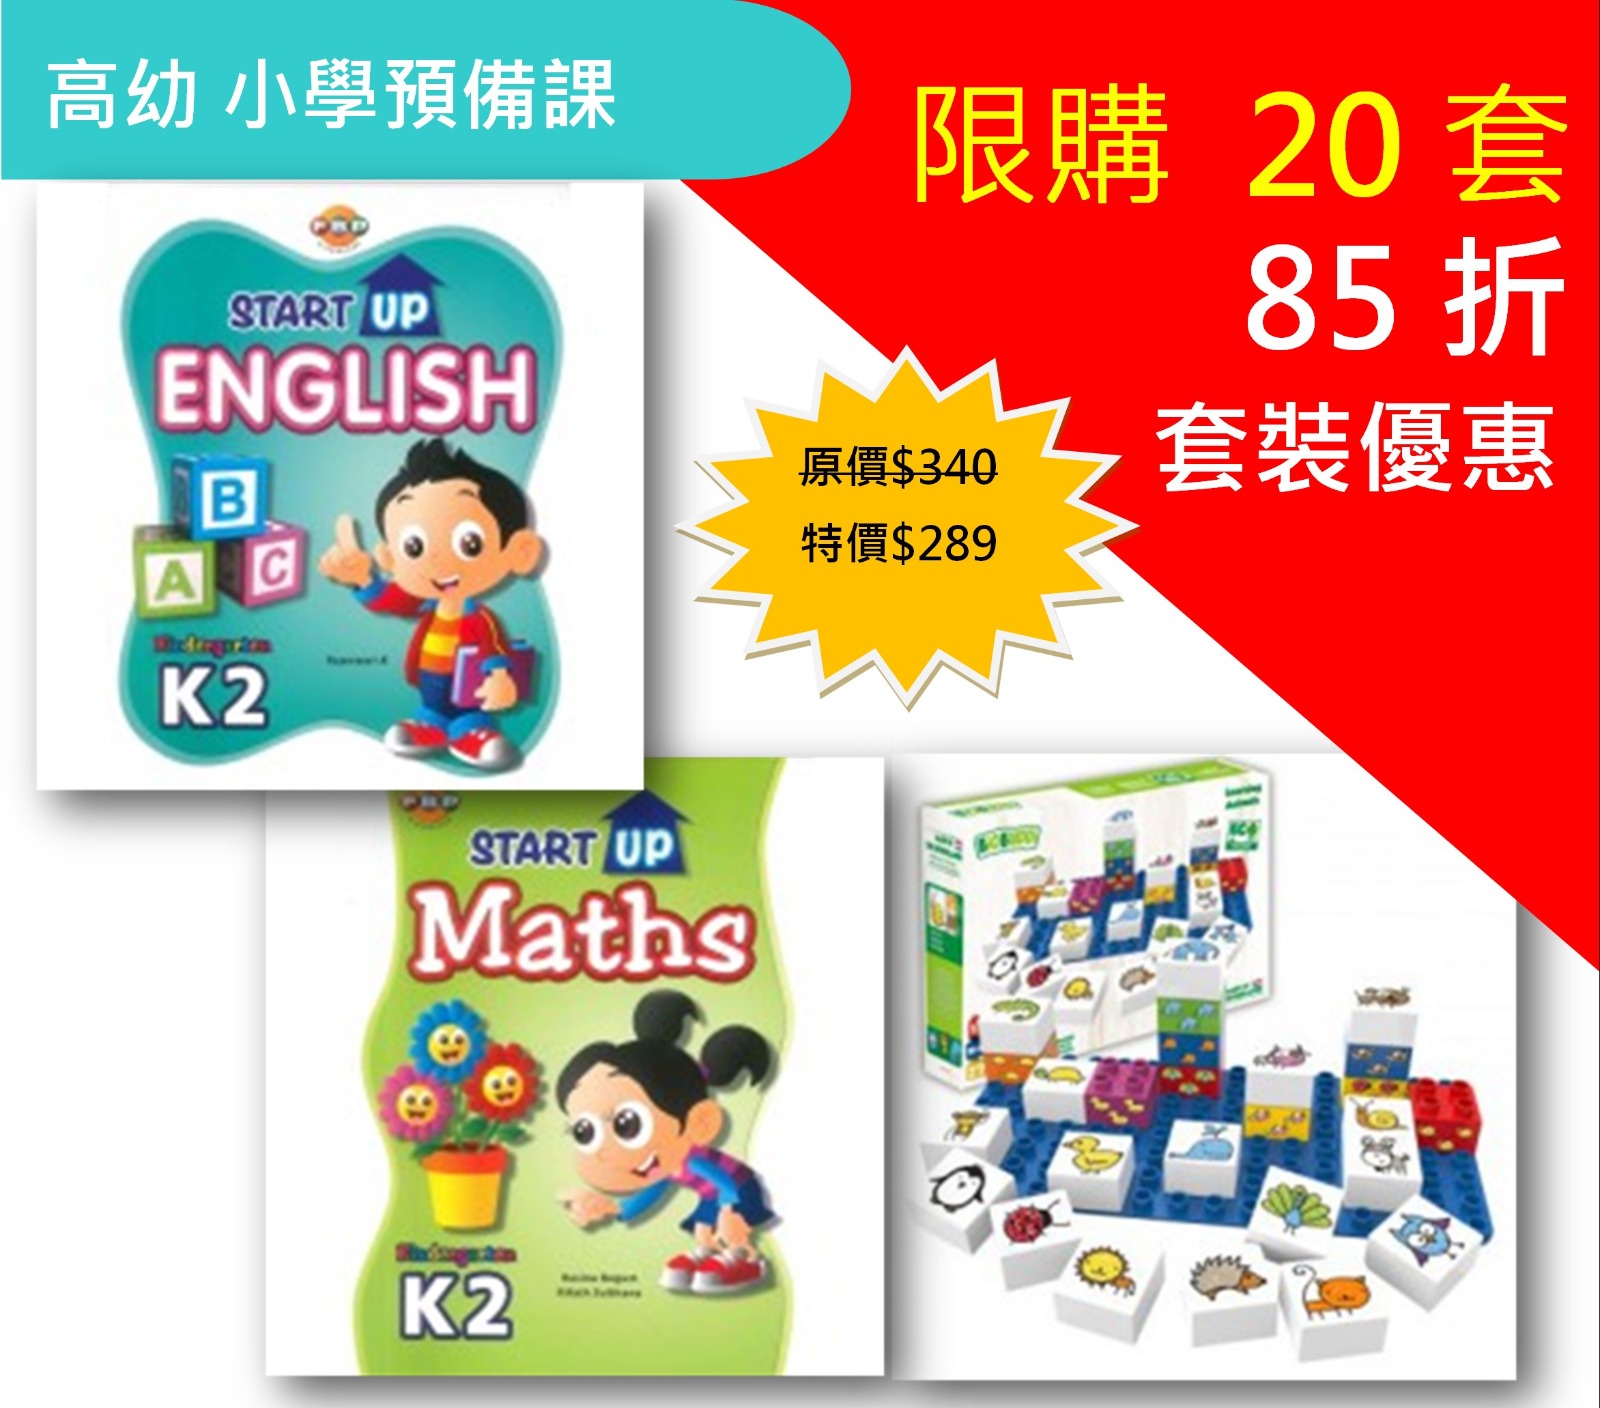 K2 Kindergarten : Exploration Learning (Singapore) 